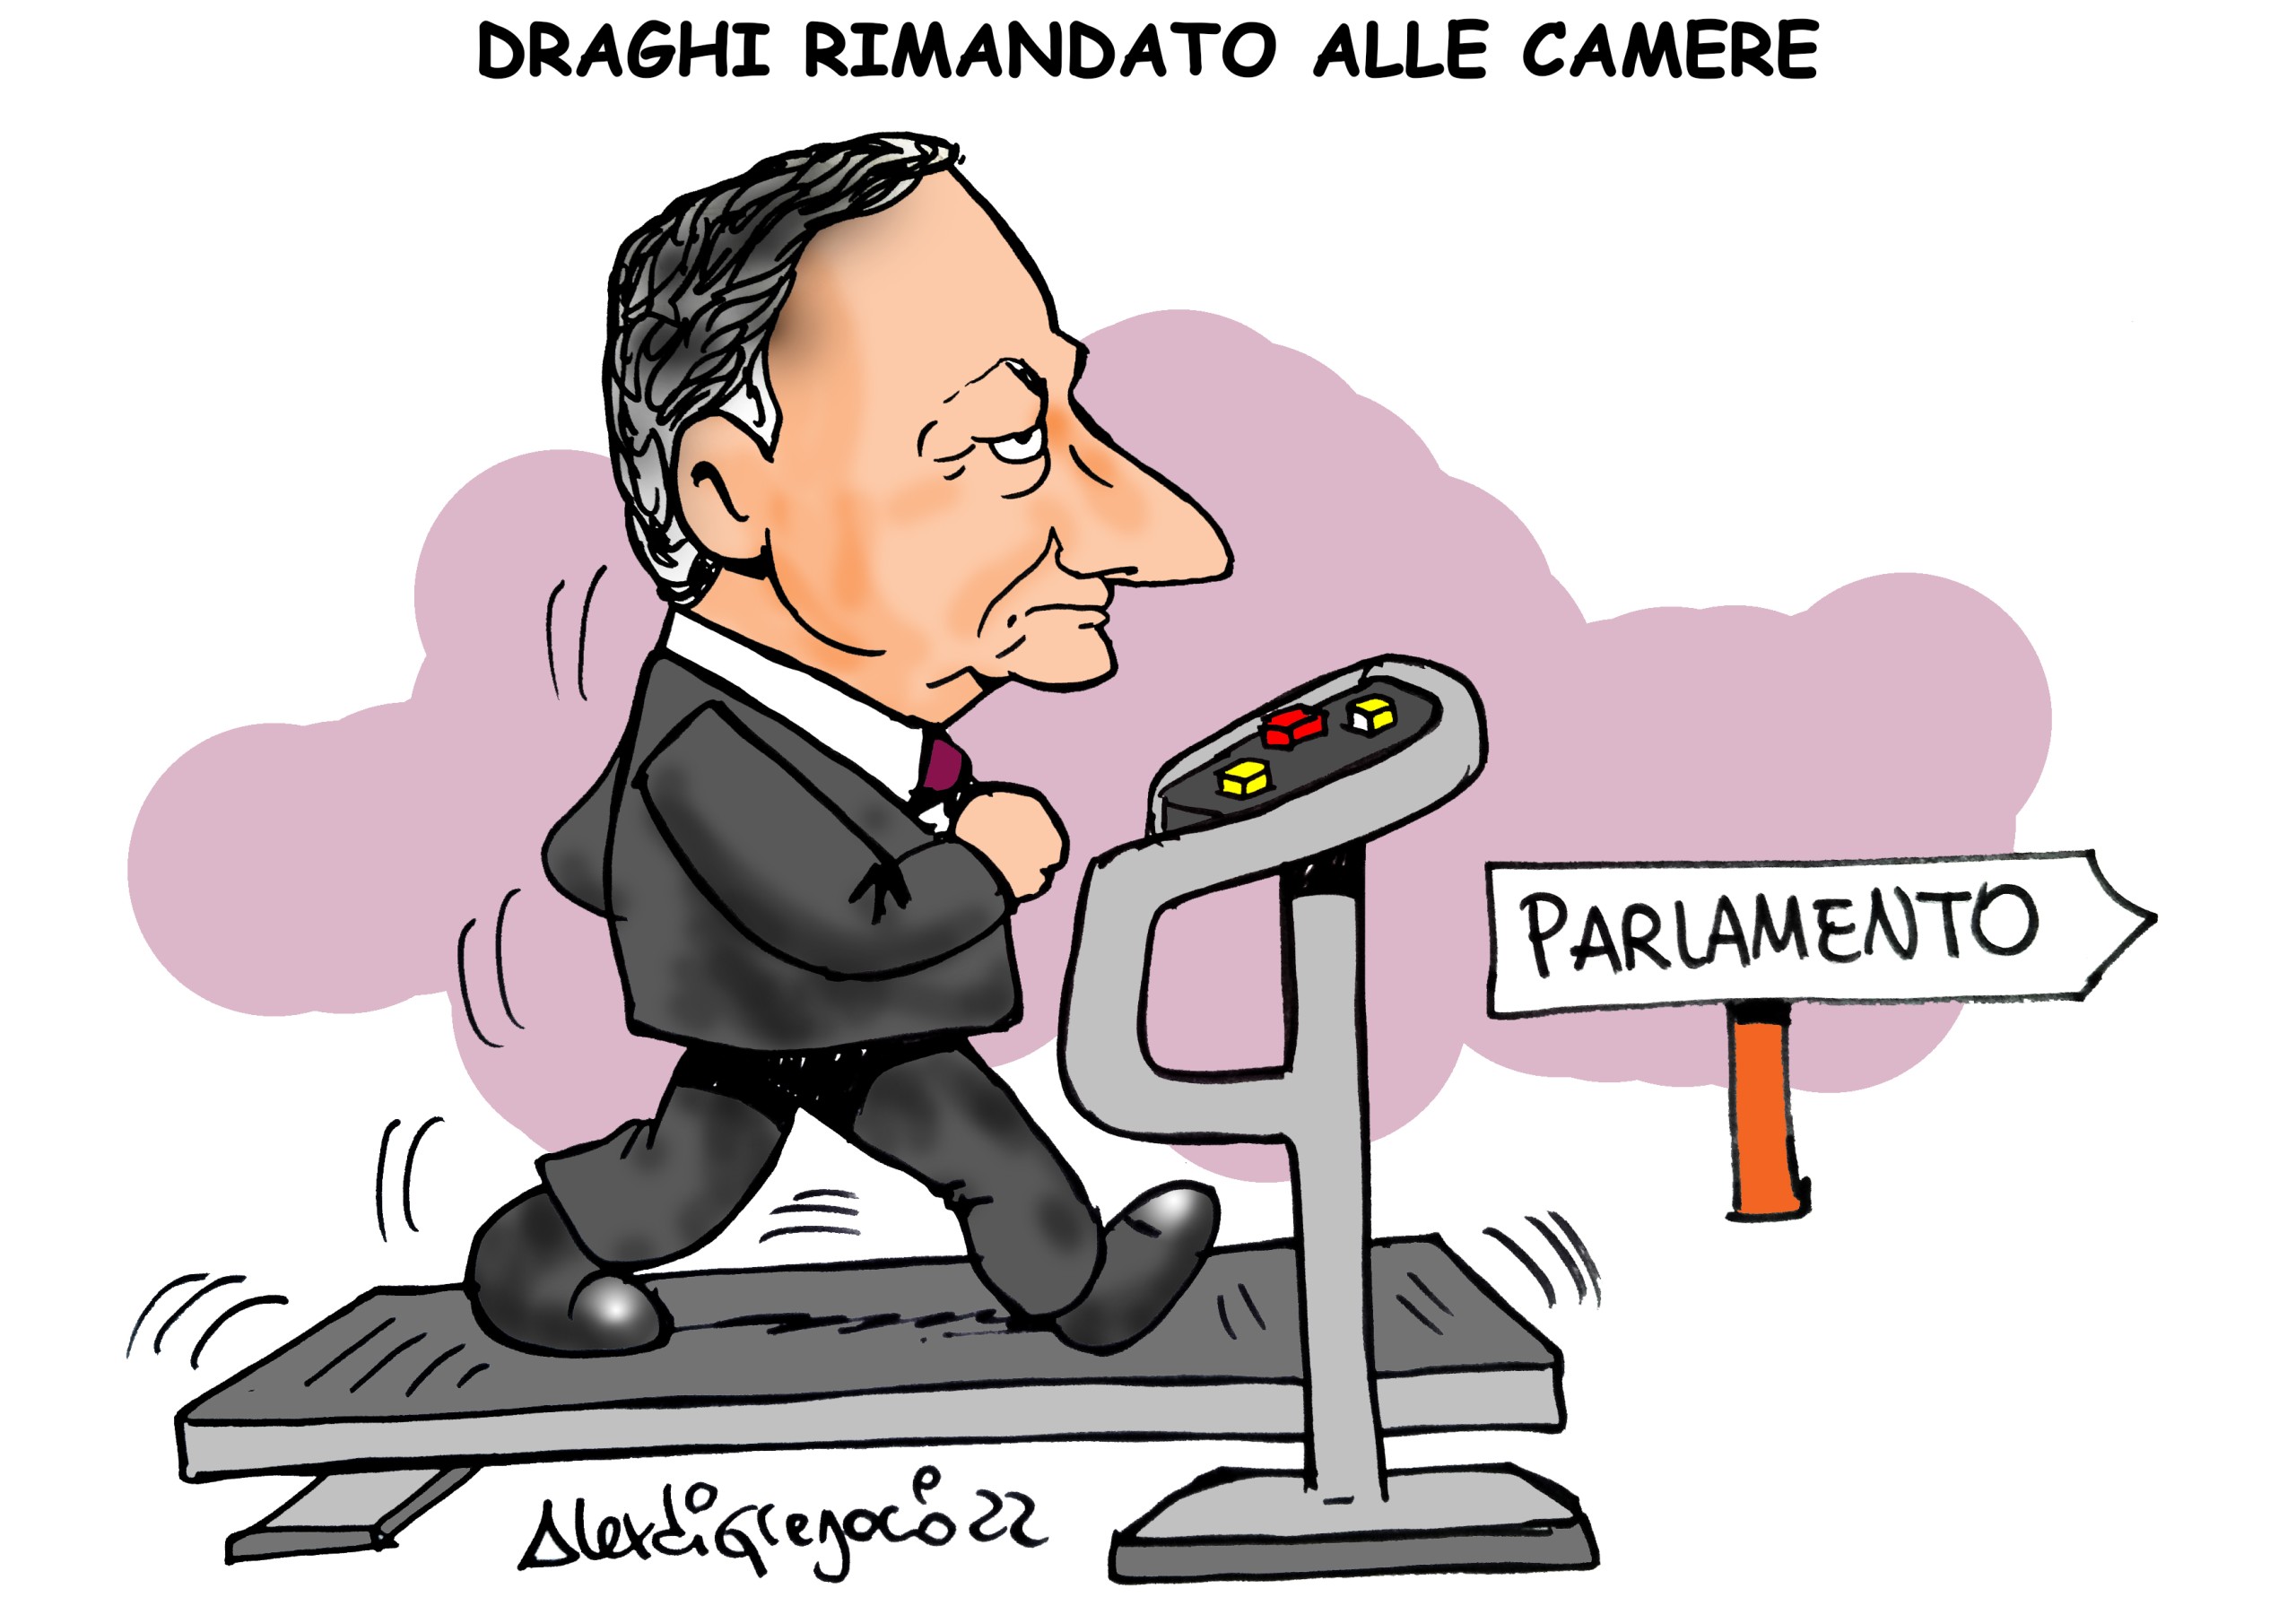 Draghi rimandato alle Camere